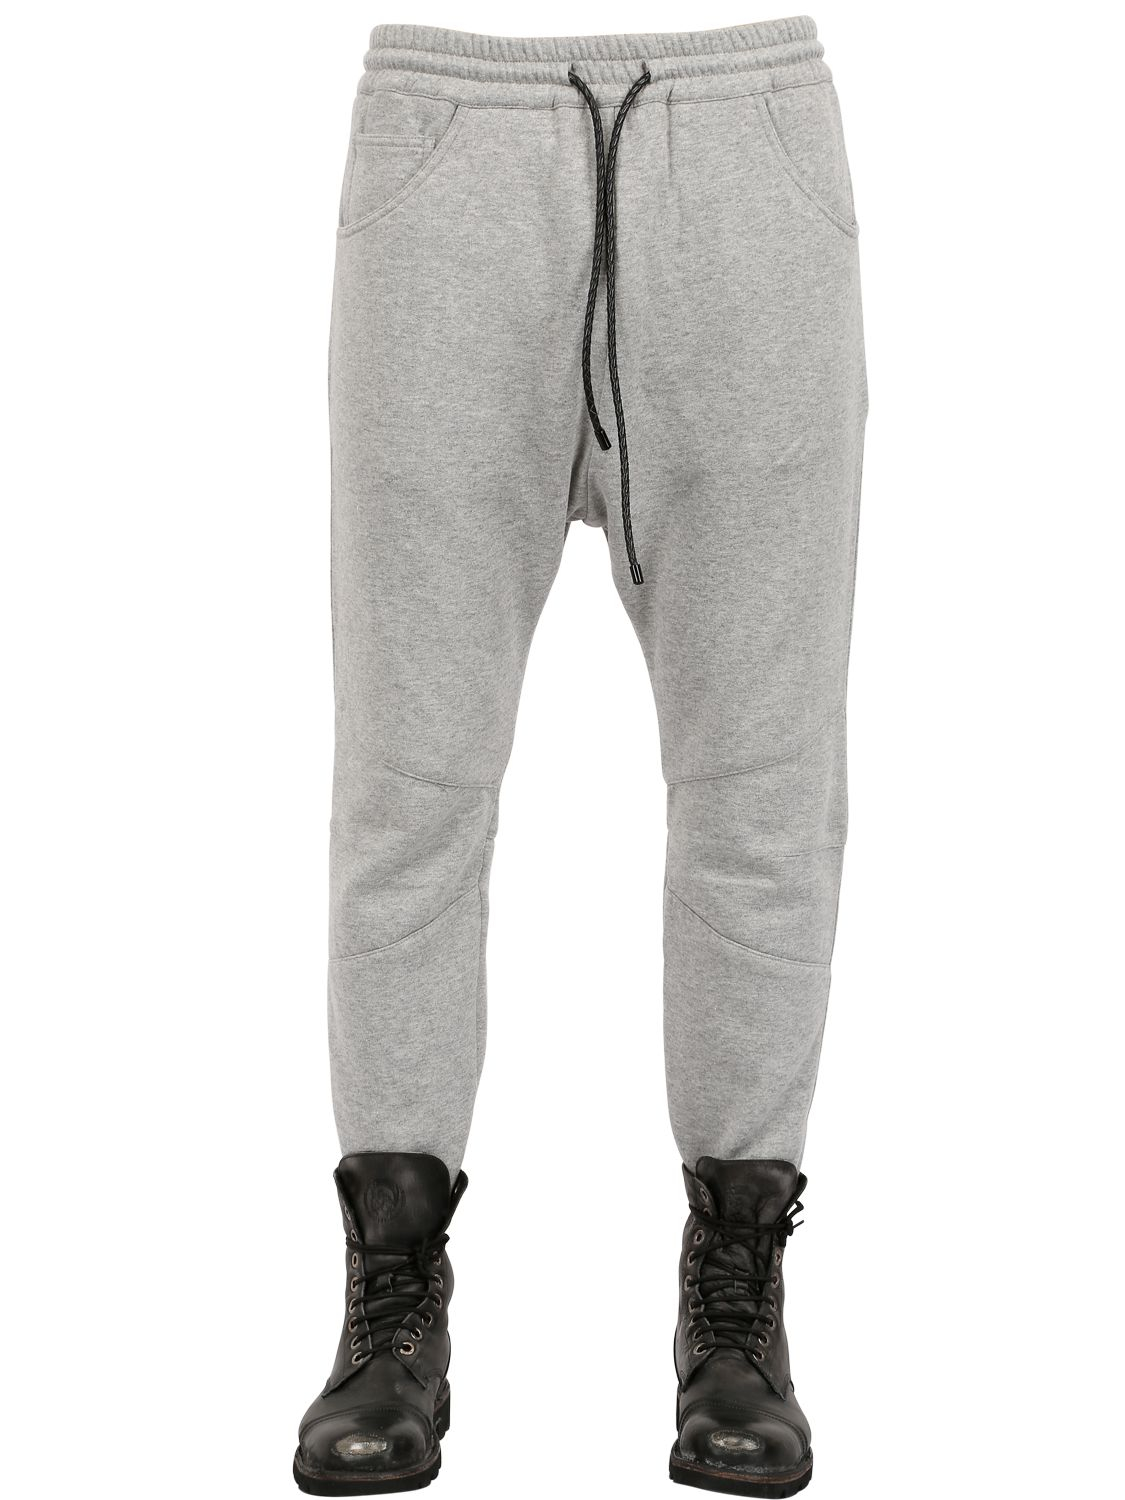 Balmain 16.5cm Cotton Jogging Trousers in Heather Grey (Grey) for Men - Lyst